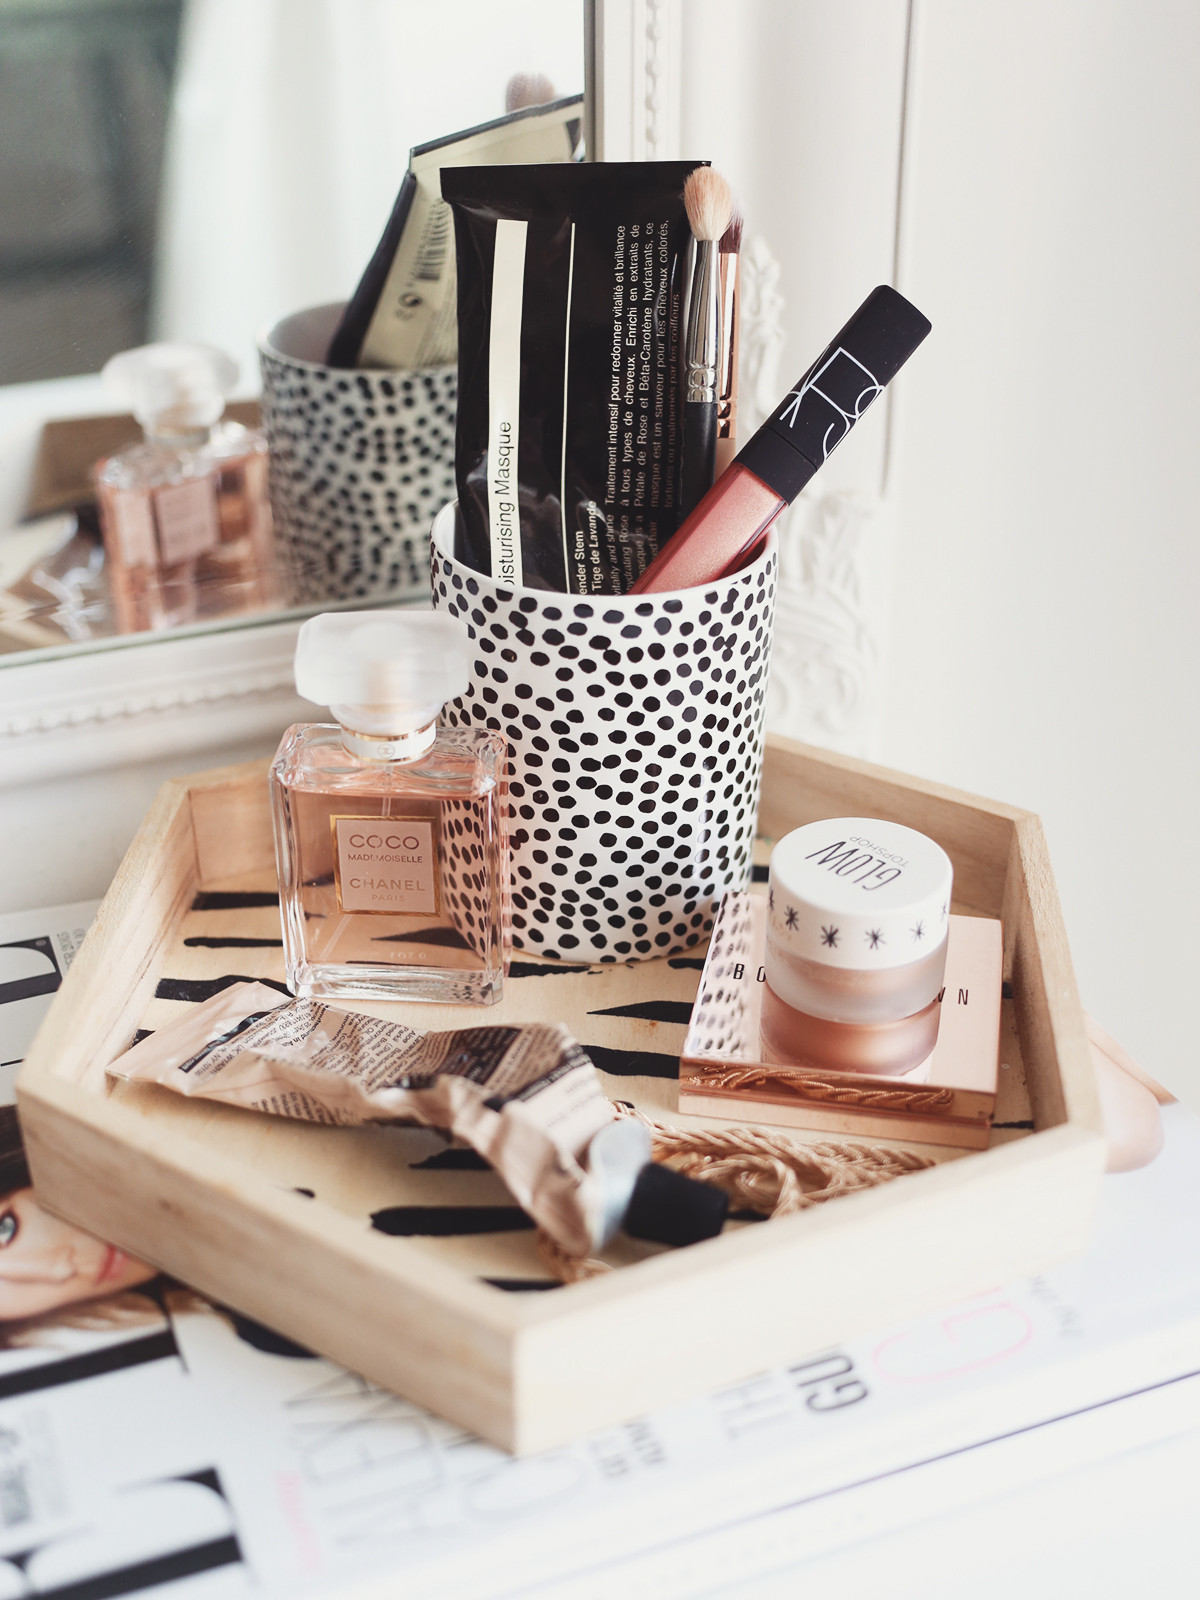 DIY Makeup Organizers
 10 Easy DIY Makeup Organizer Ideas You’ll Want to Copy